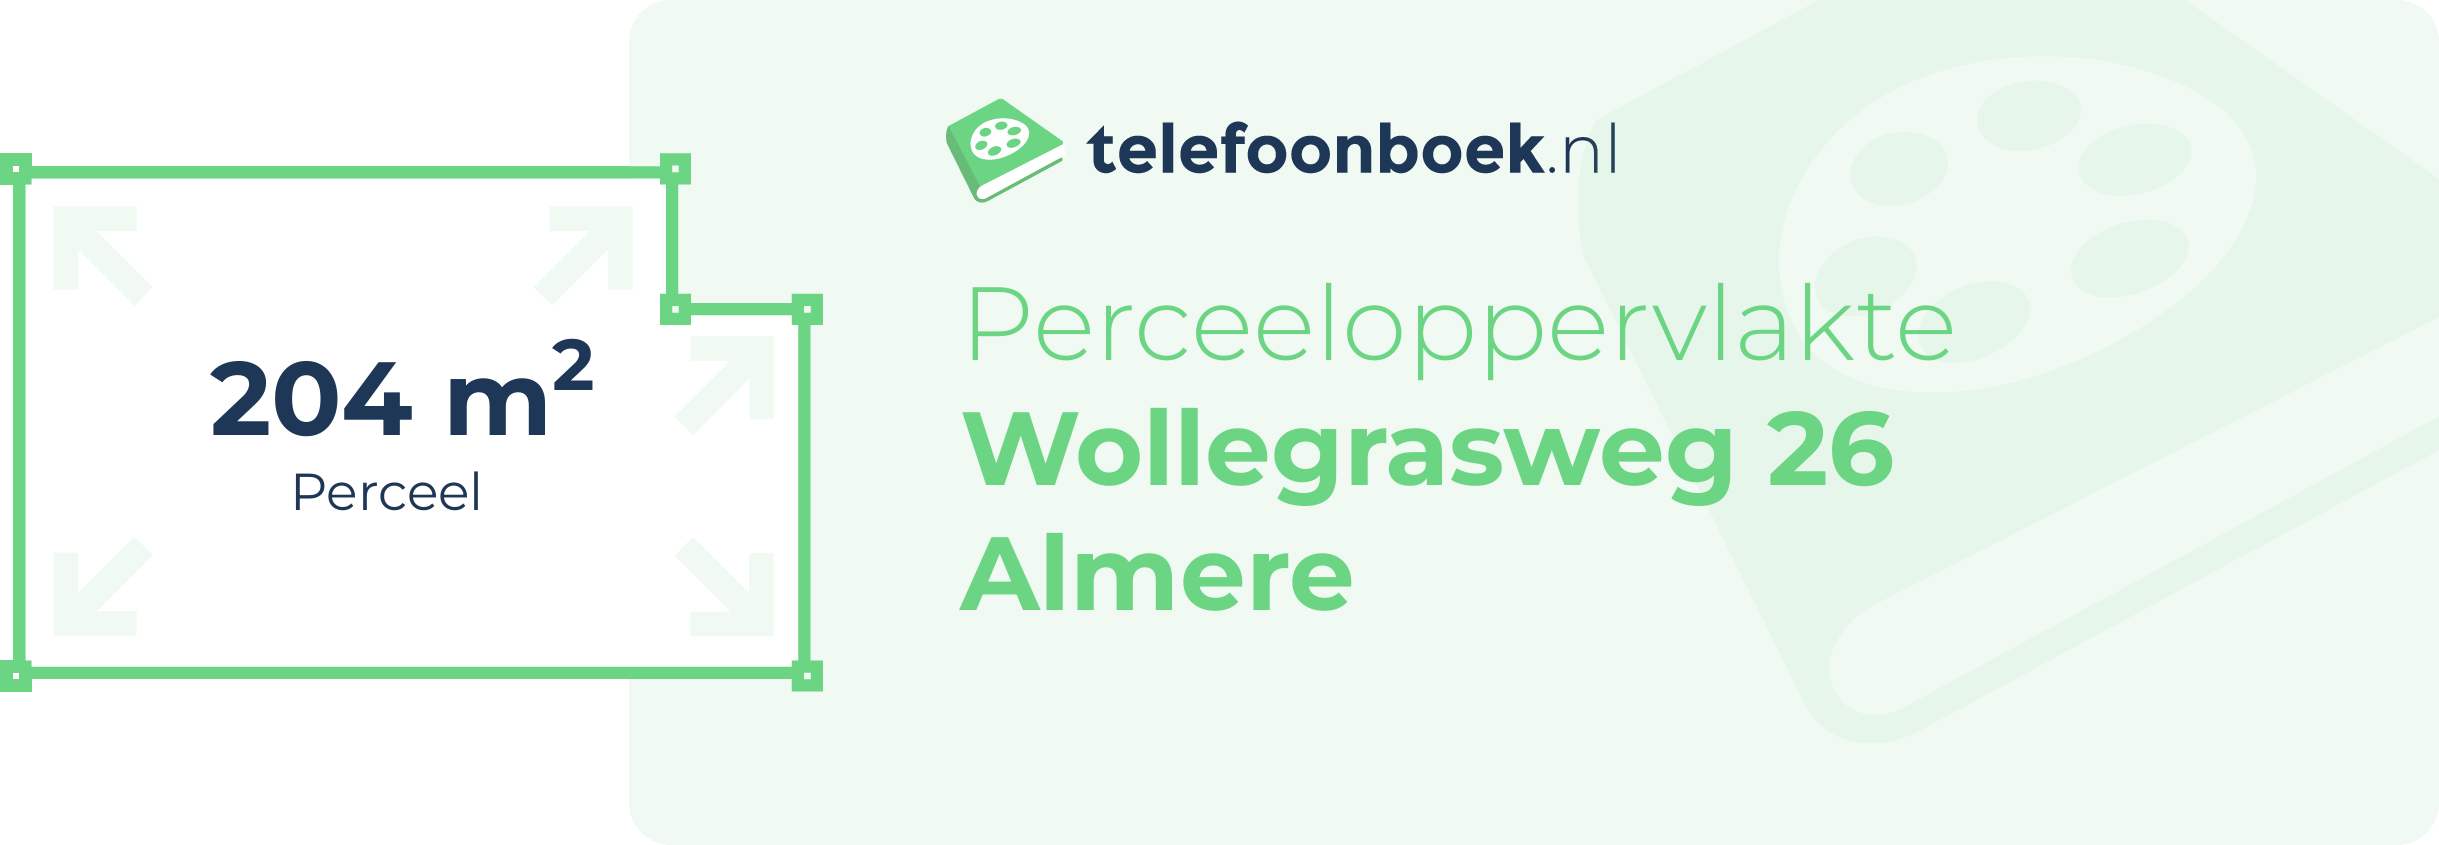 Perceeloppervlakte Wollegrasweg 26 Almere